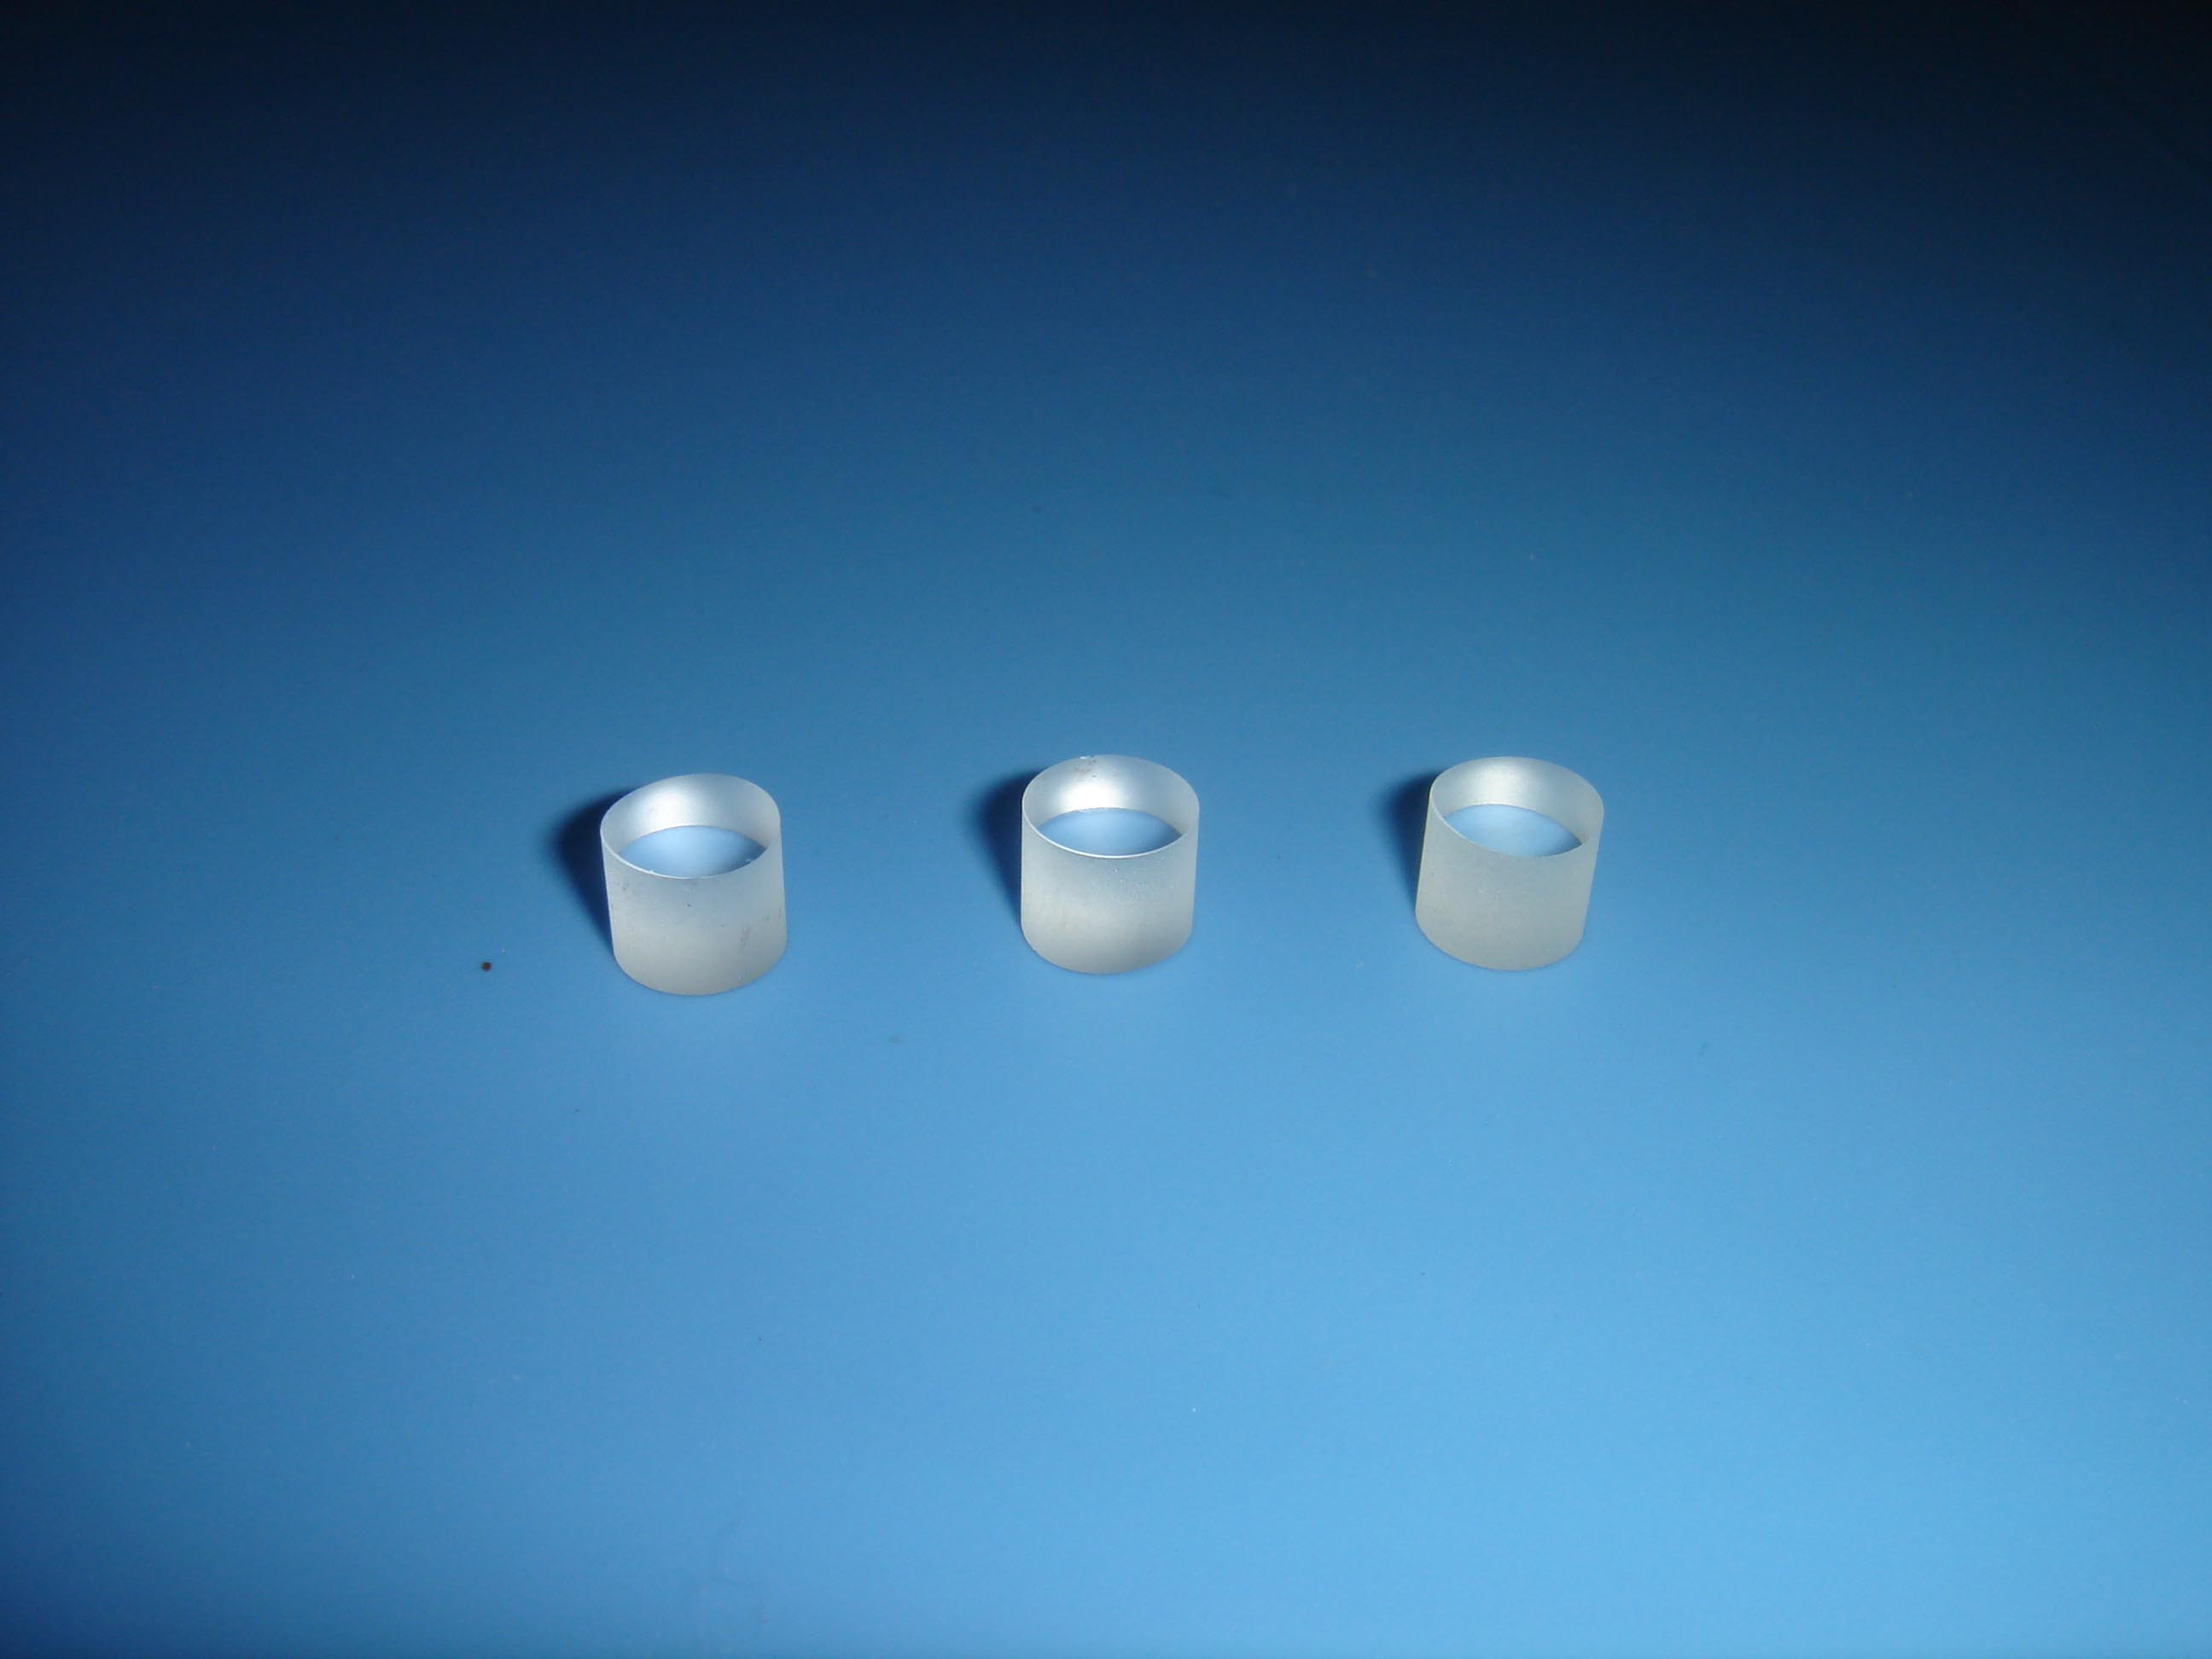 plano-convex cylindrical lenses